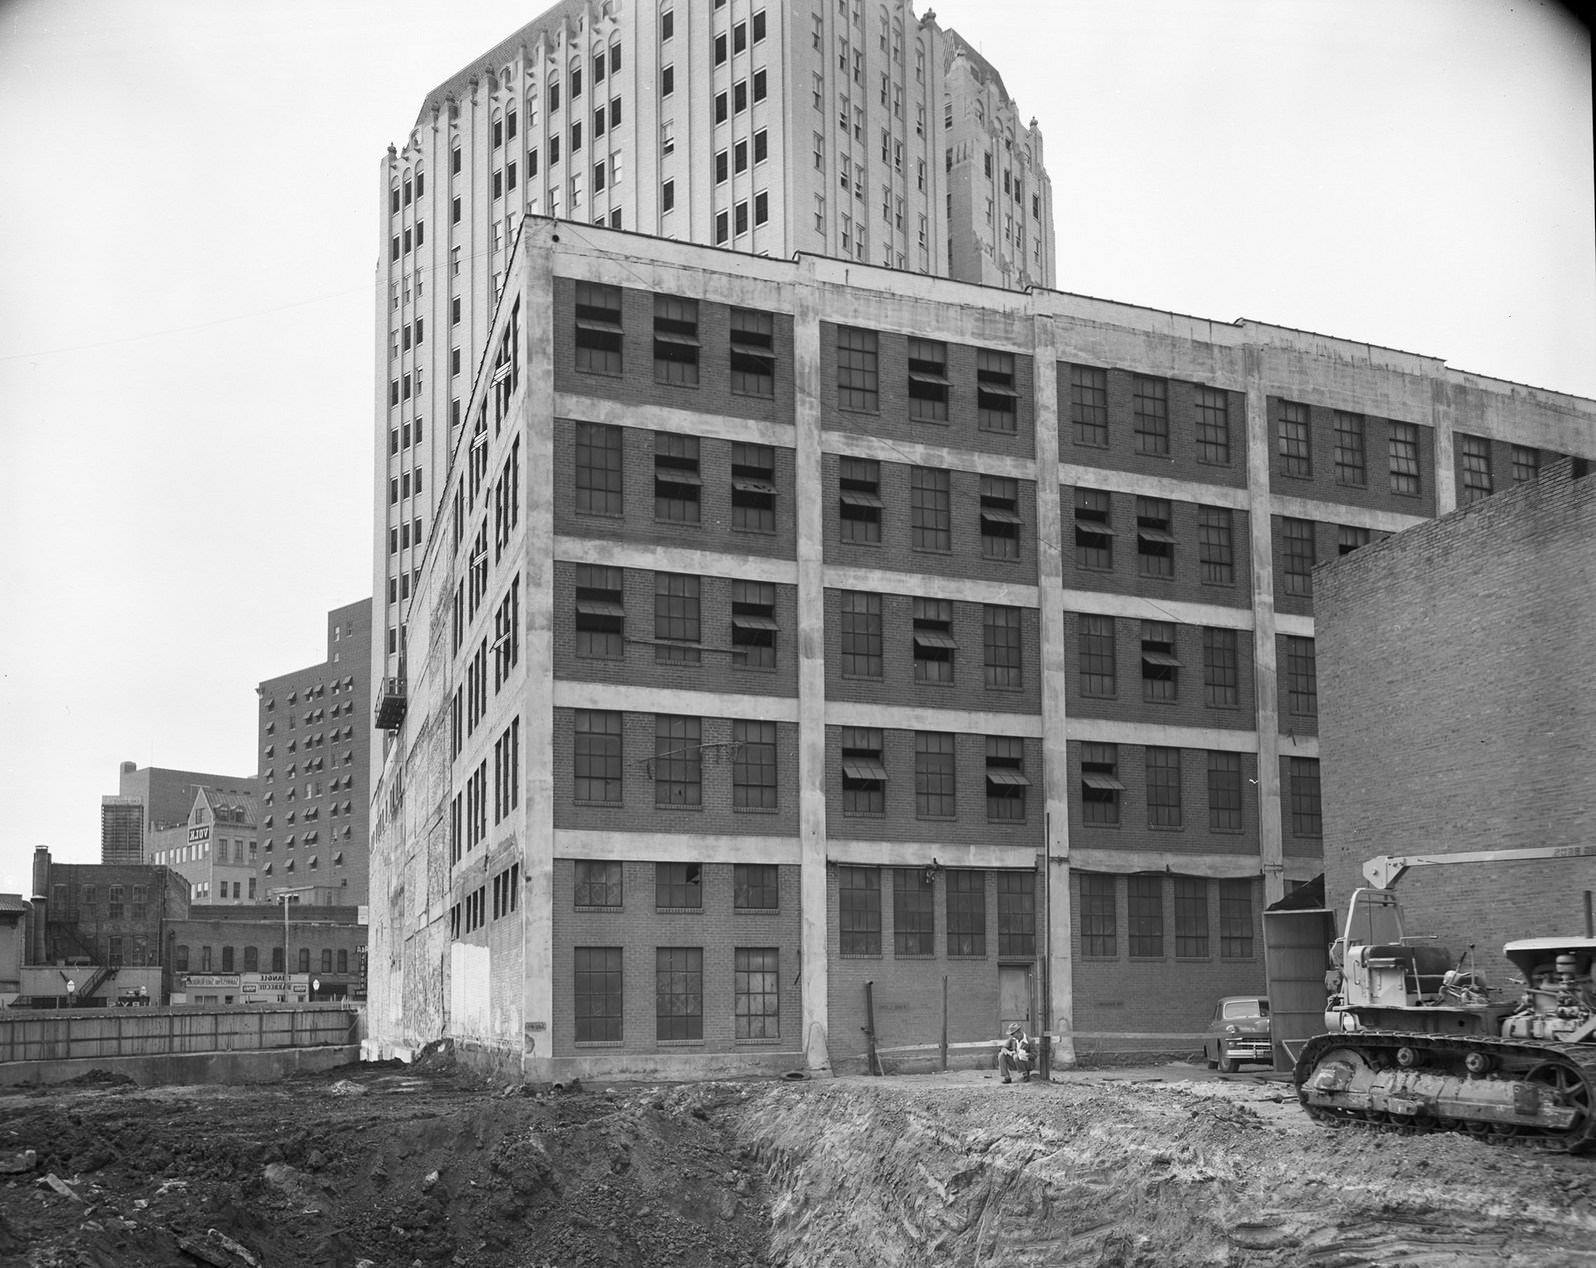 Downtown Dallas, preparing building site for construction, 1950